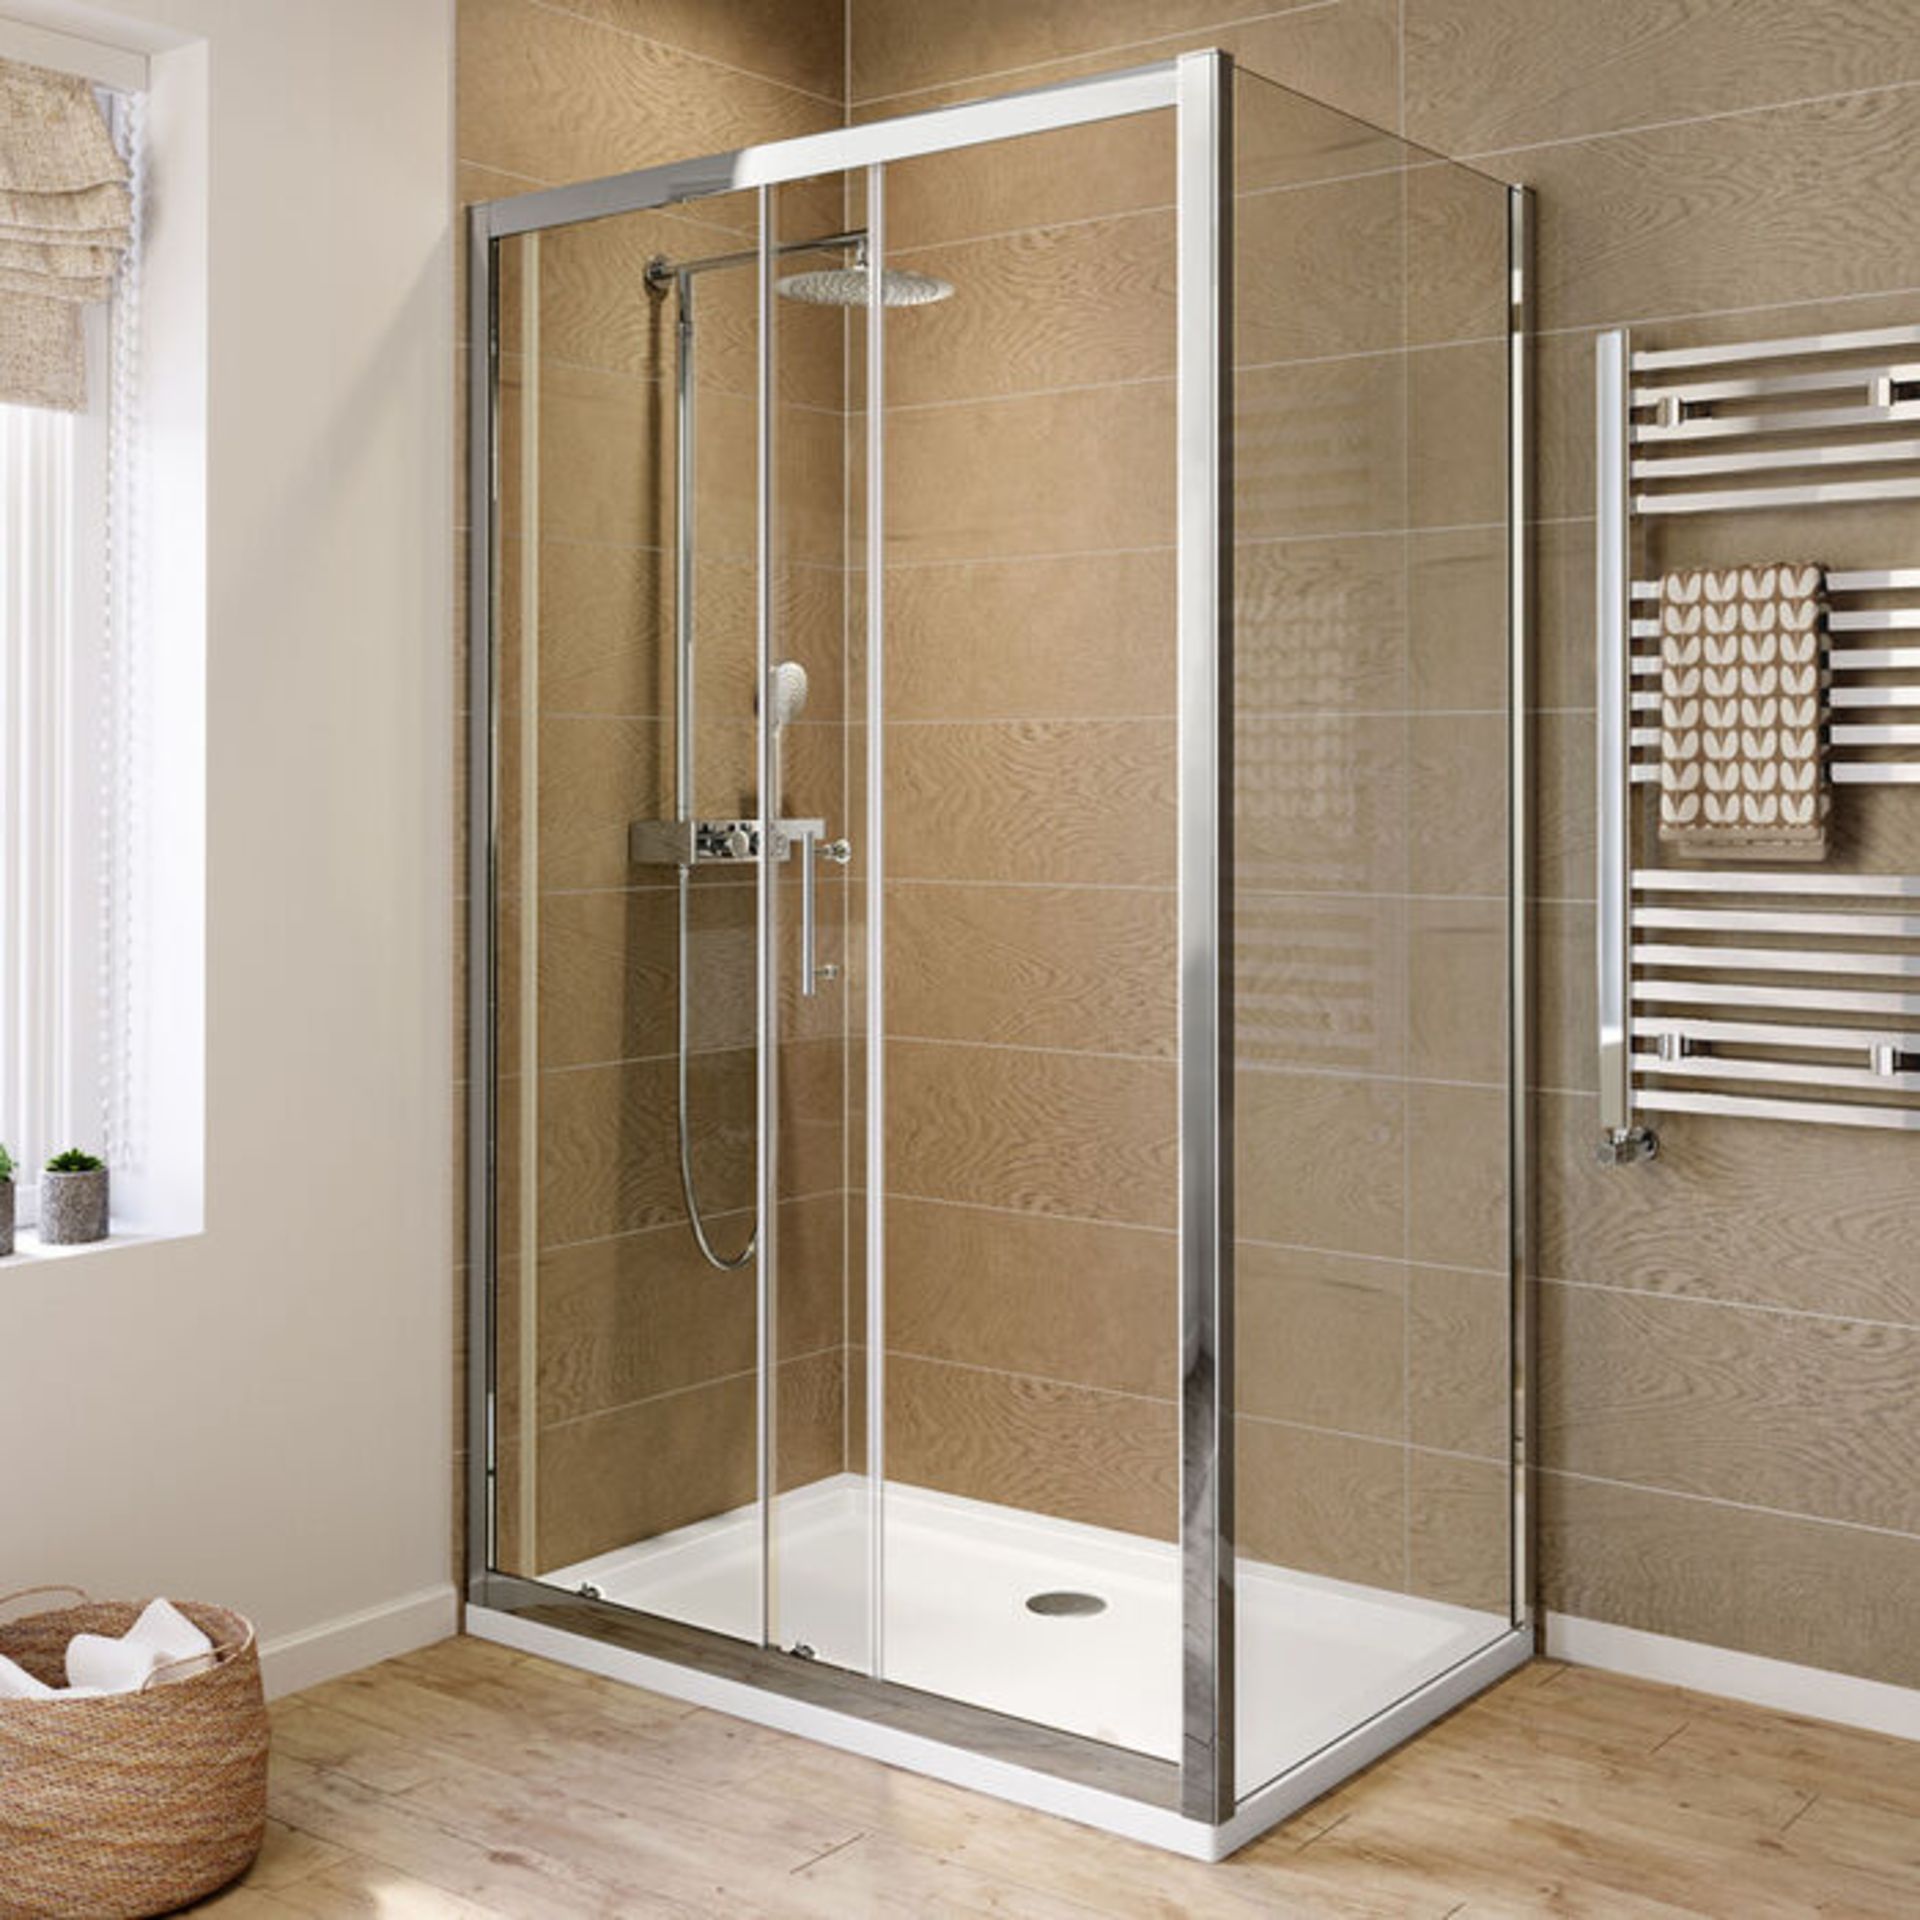 (AA86) 1400x800mm - 6mm - Elements Sliding Door Shower Enclosure. RRP £388.99. 6mm Safety Glas... - Image 2 of 4